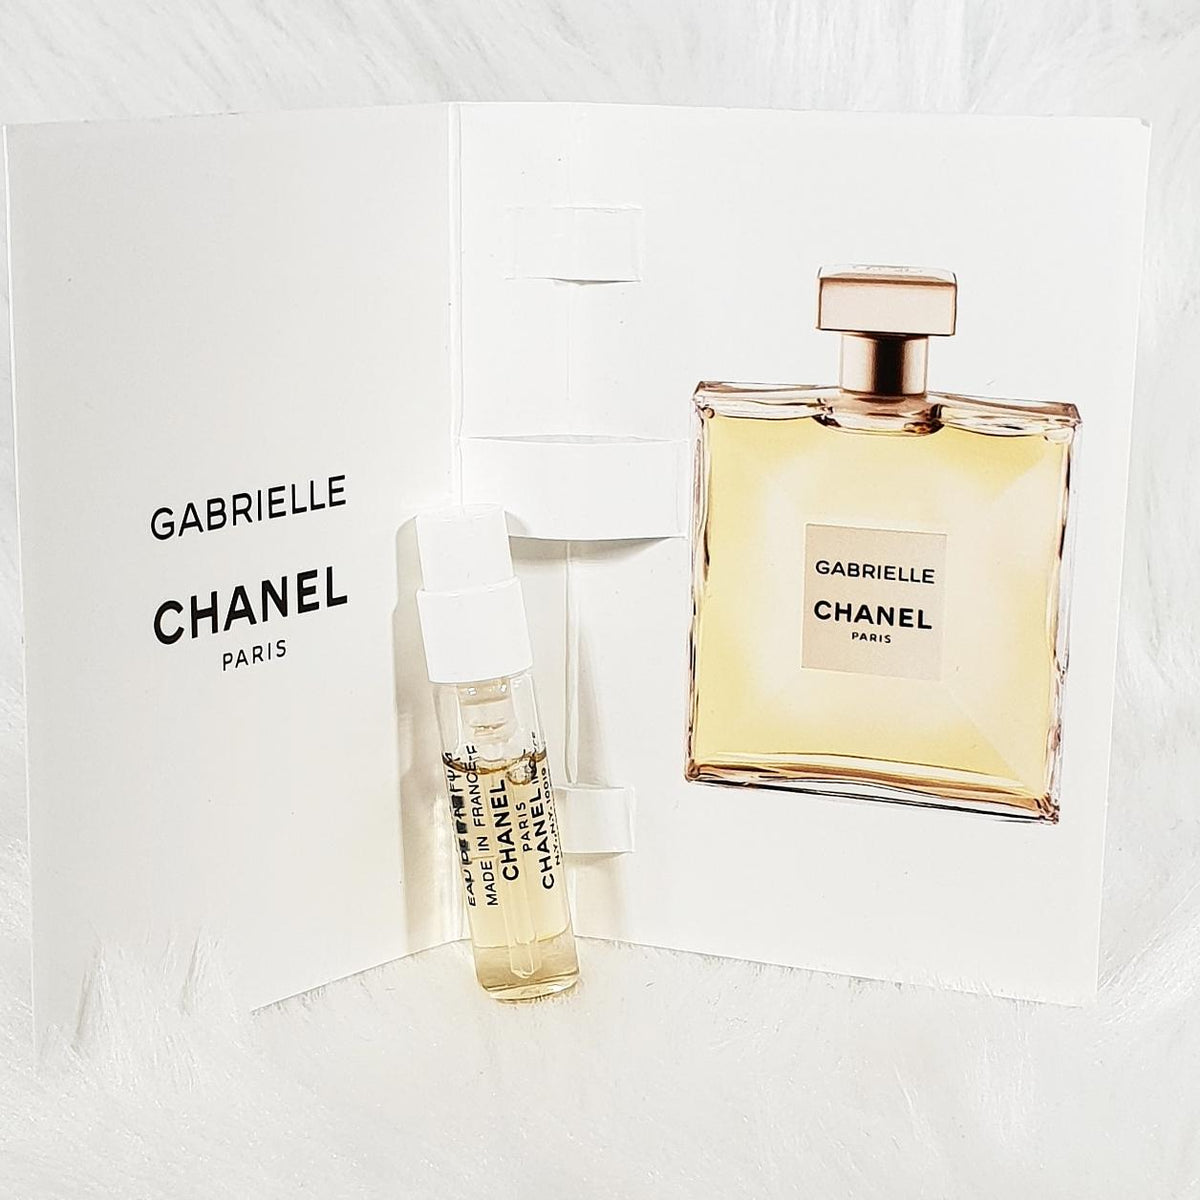 Chanel Gabrielle eau de parfum 1.5 ml perfume sample vial travel size –  Perfume Discovery Hub